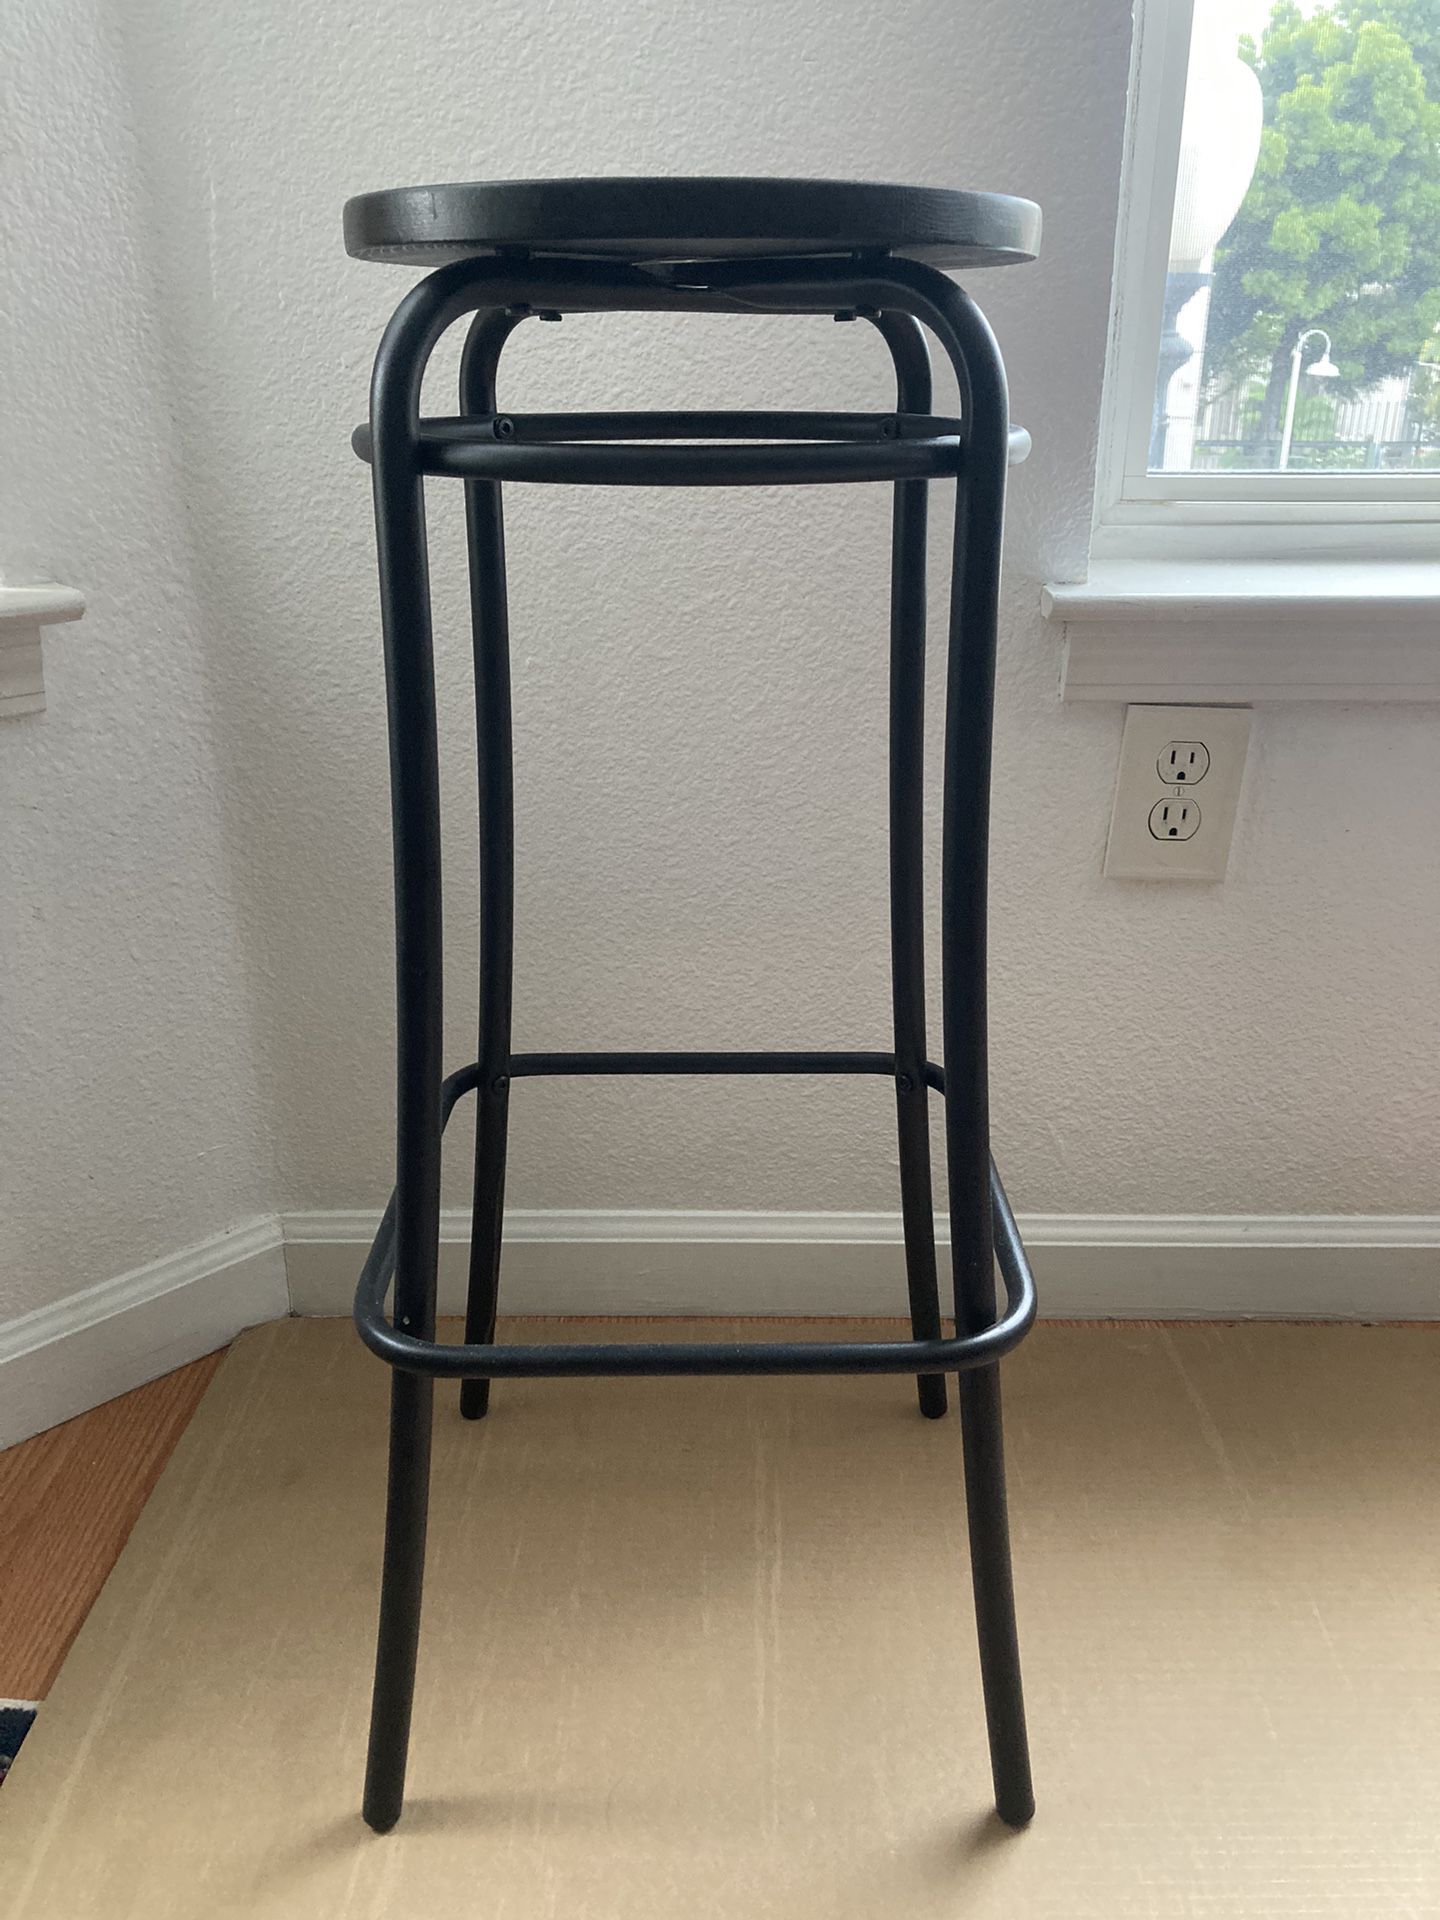 Ikea bar stool